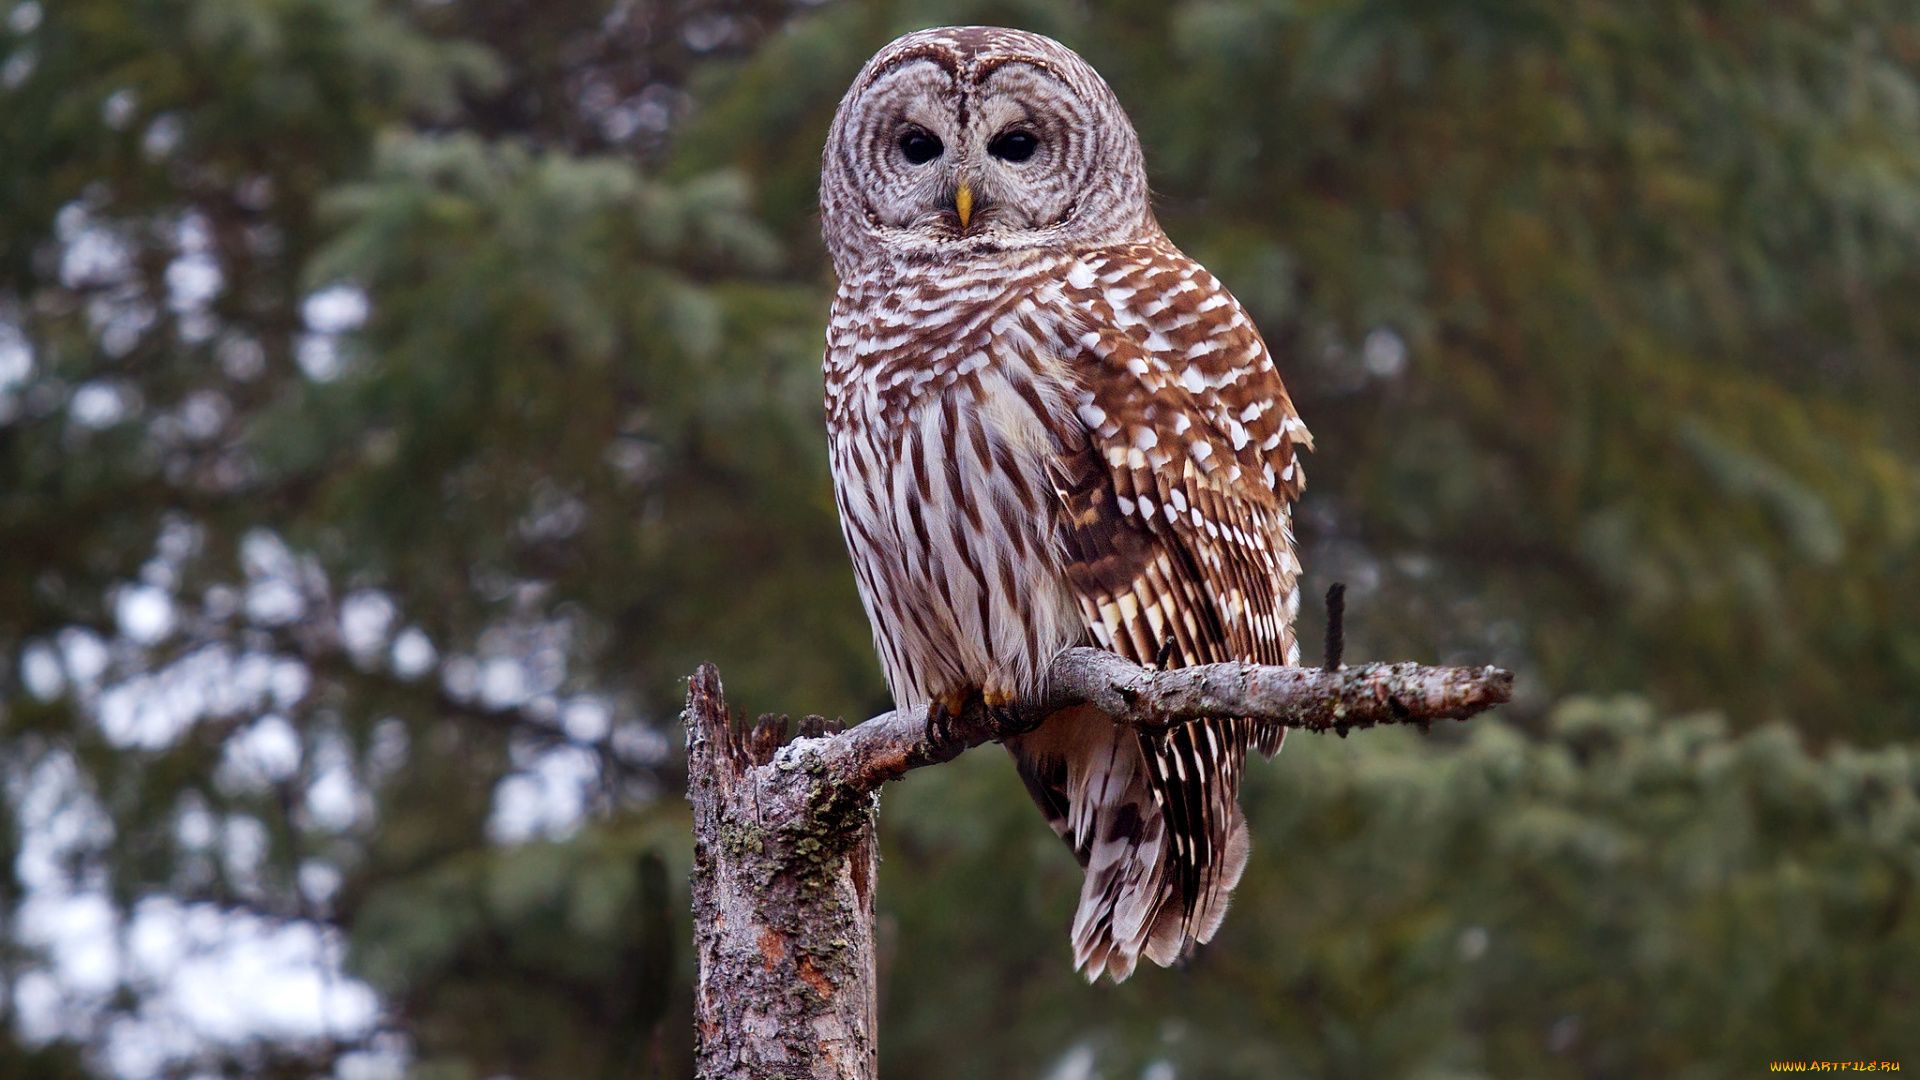 A Barred Owl